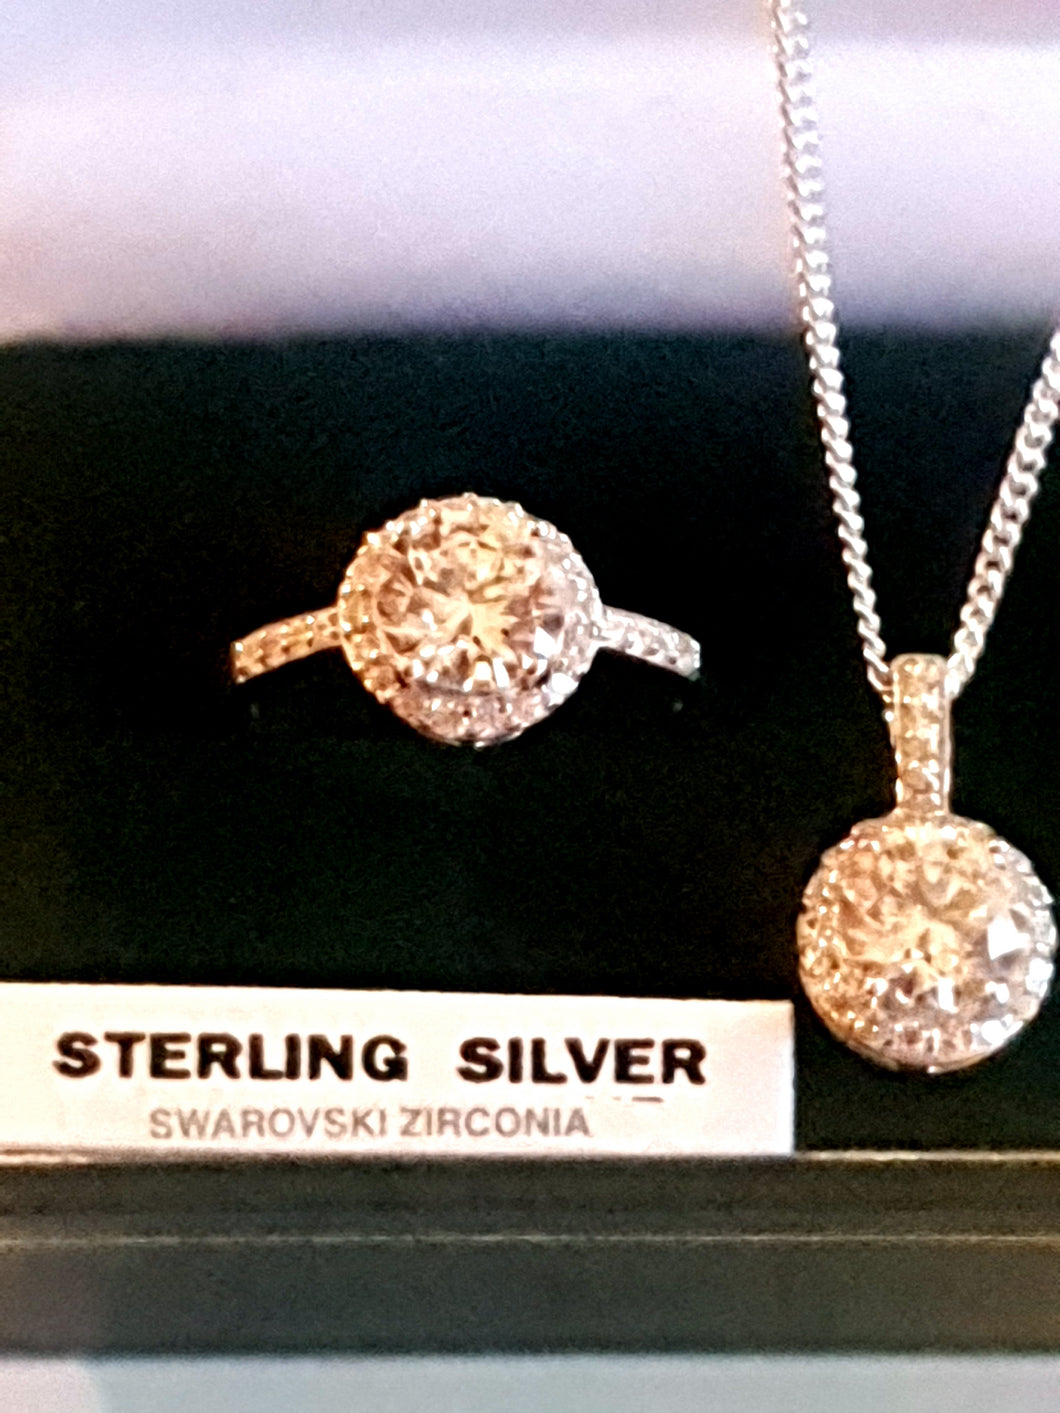 Swarovski Zirconia Silver Ring & Pendant Set